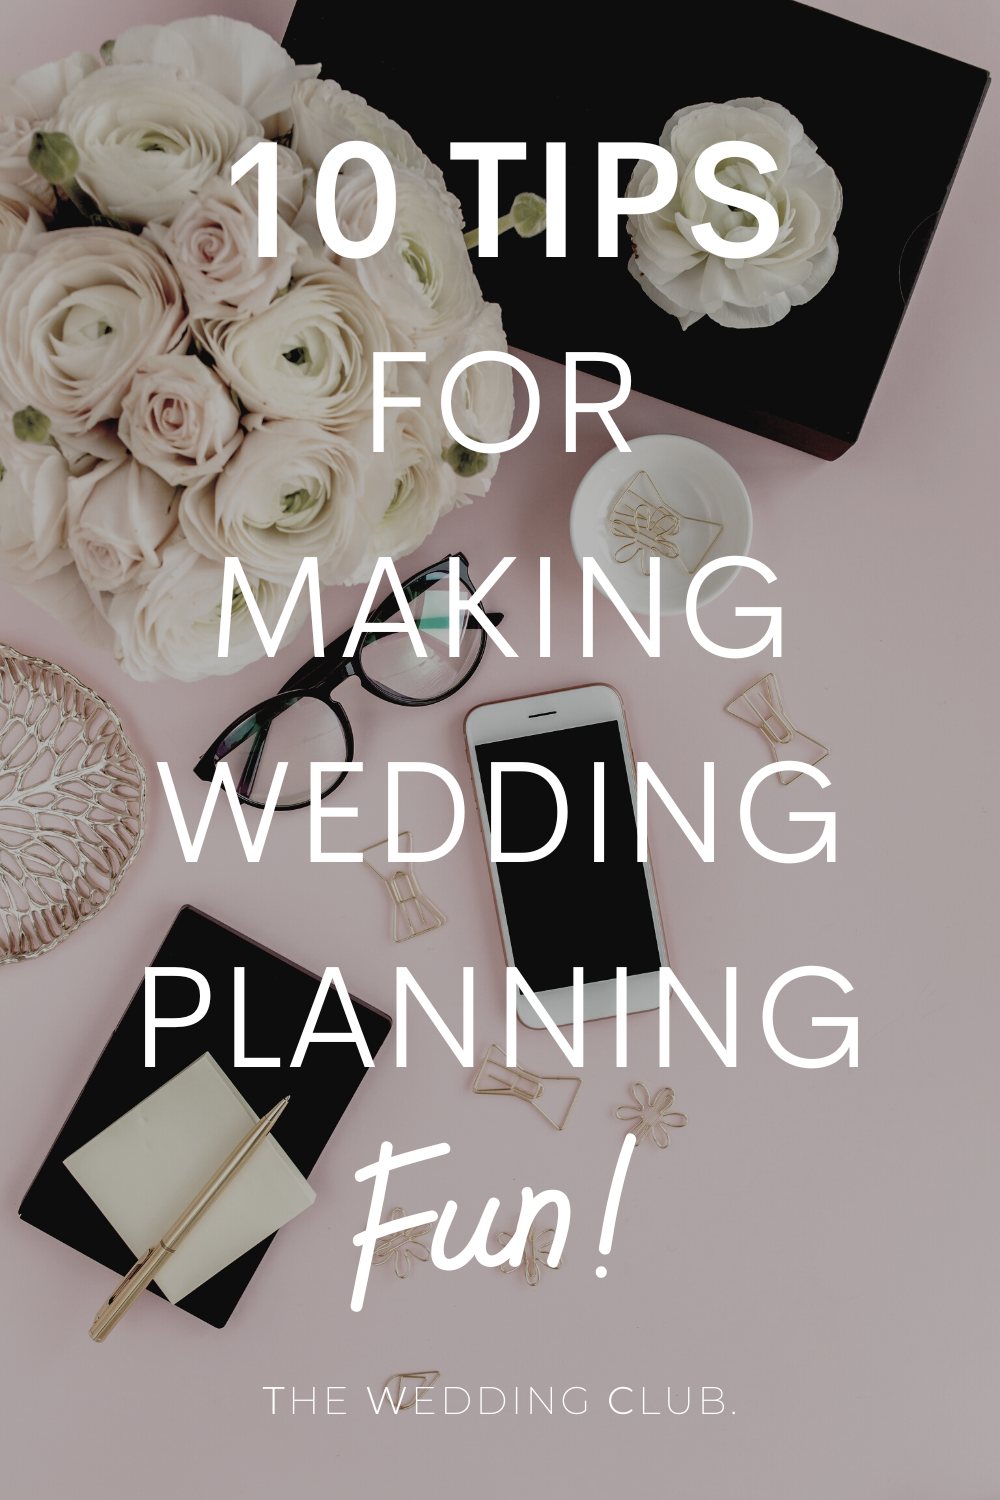 How to make wedding planning fun - 10 tips - The Wedding Club